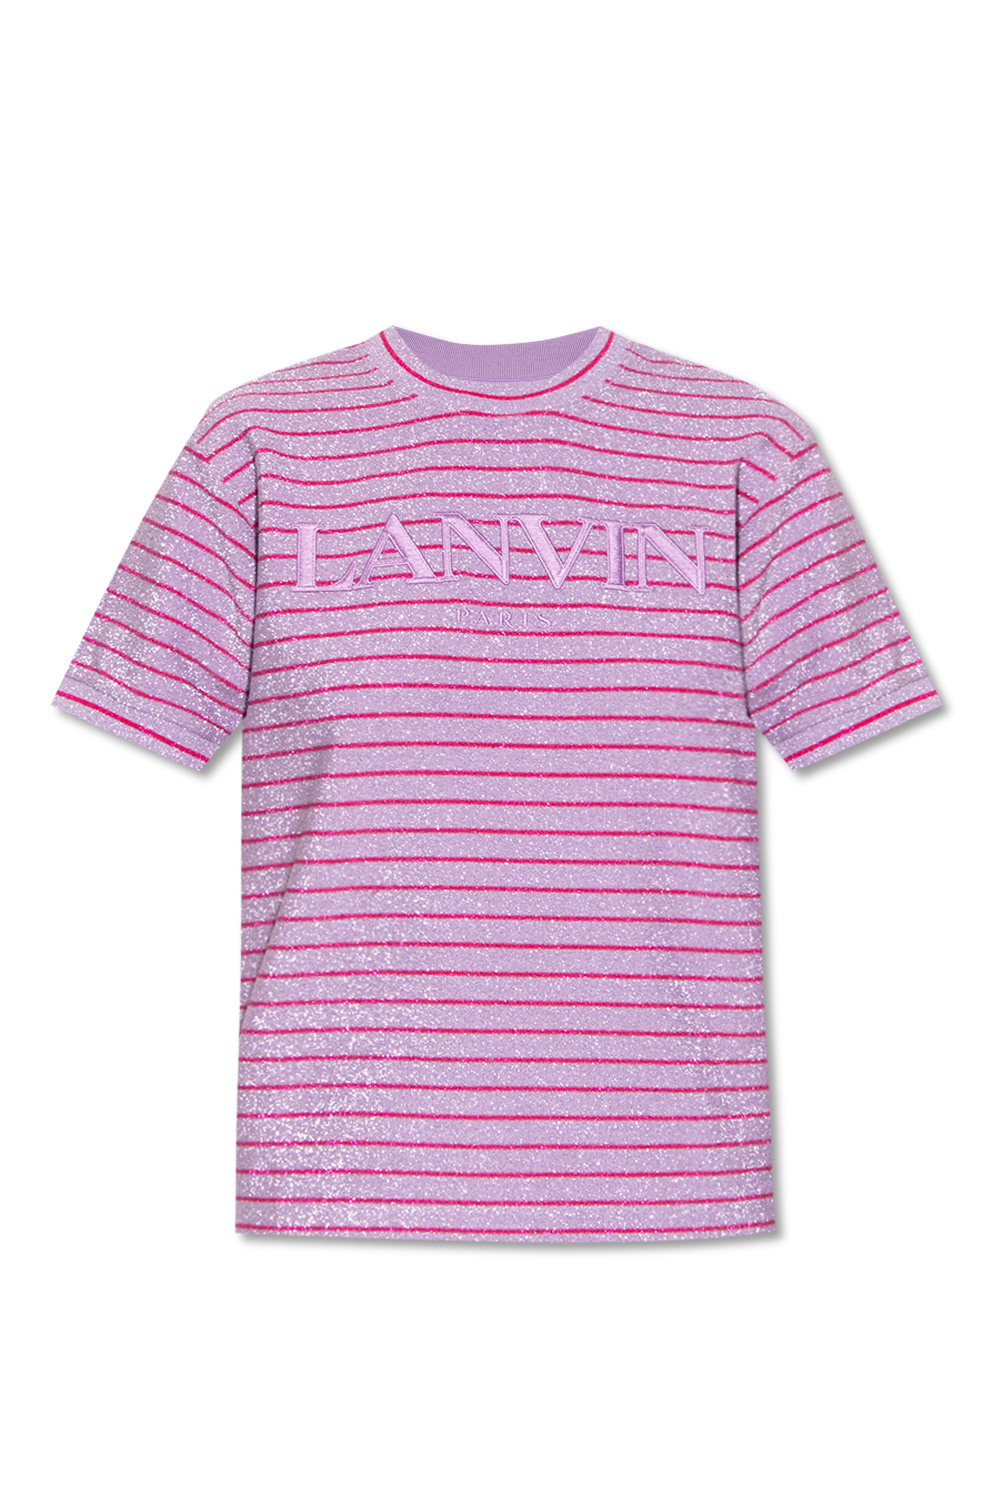 Lanvin T-shirt motif with lurex threads